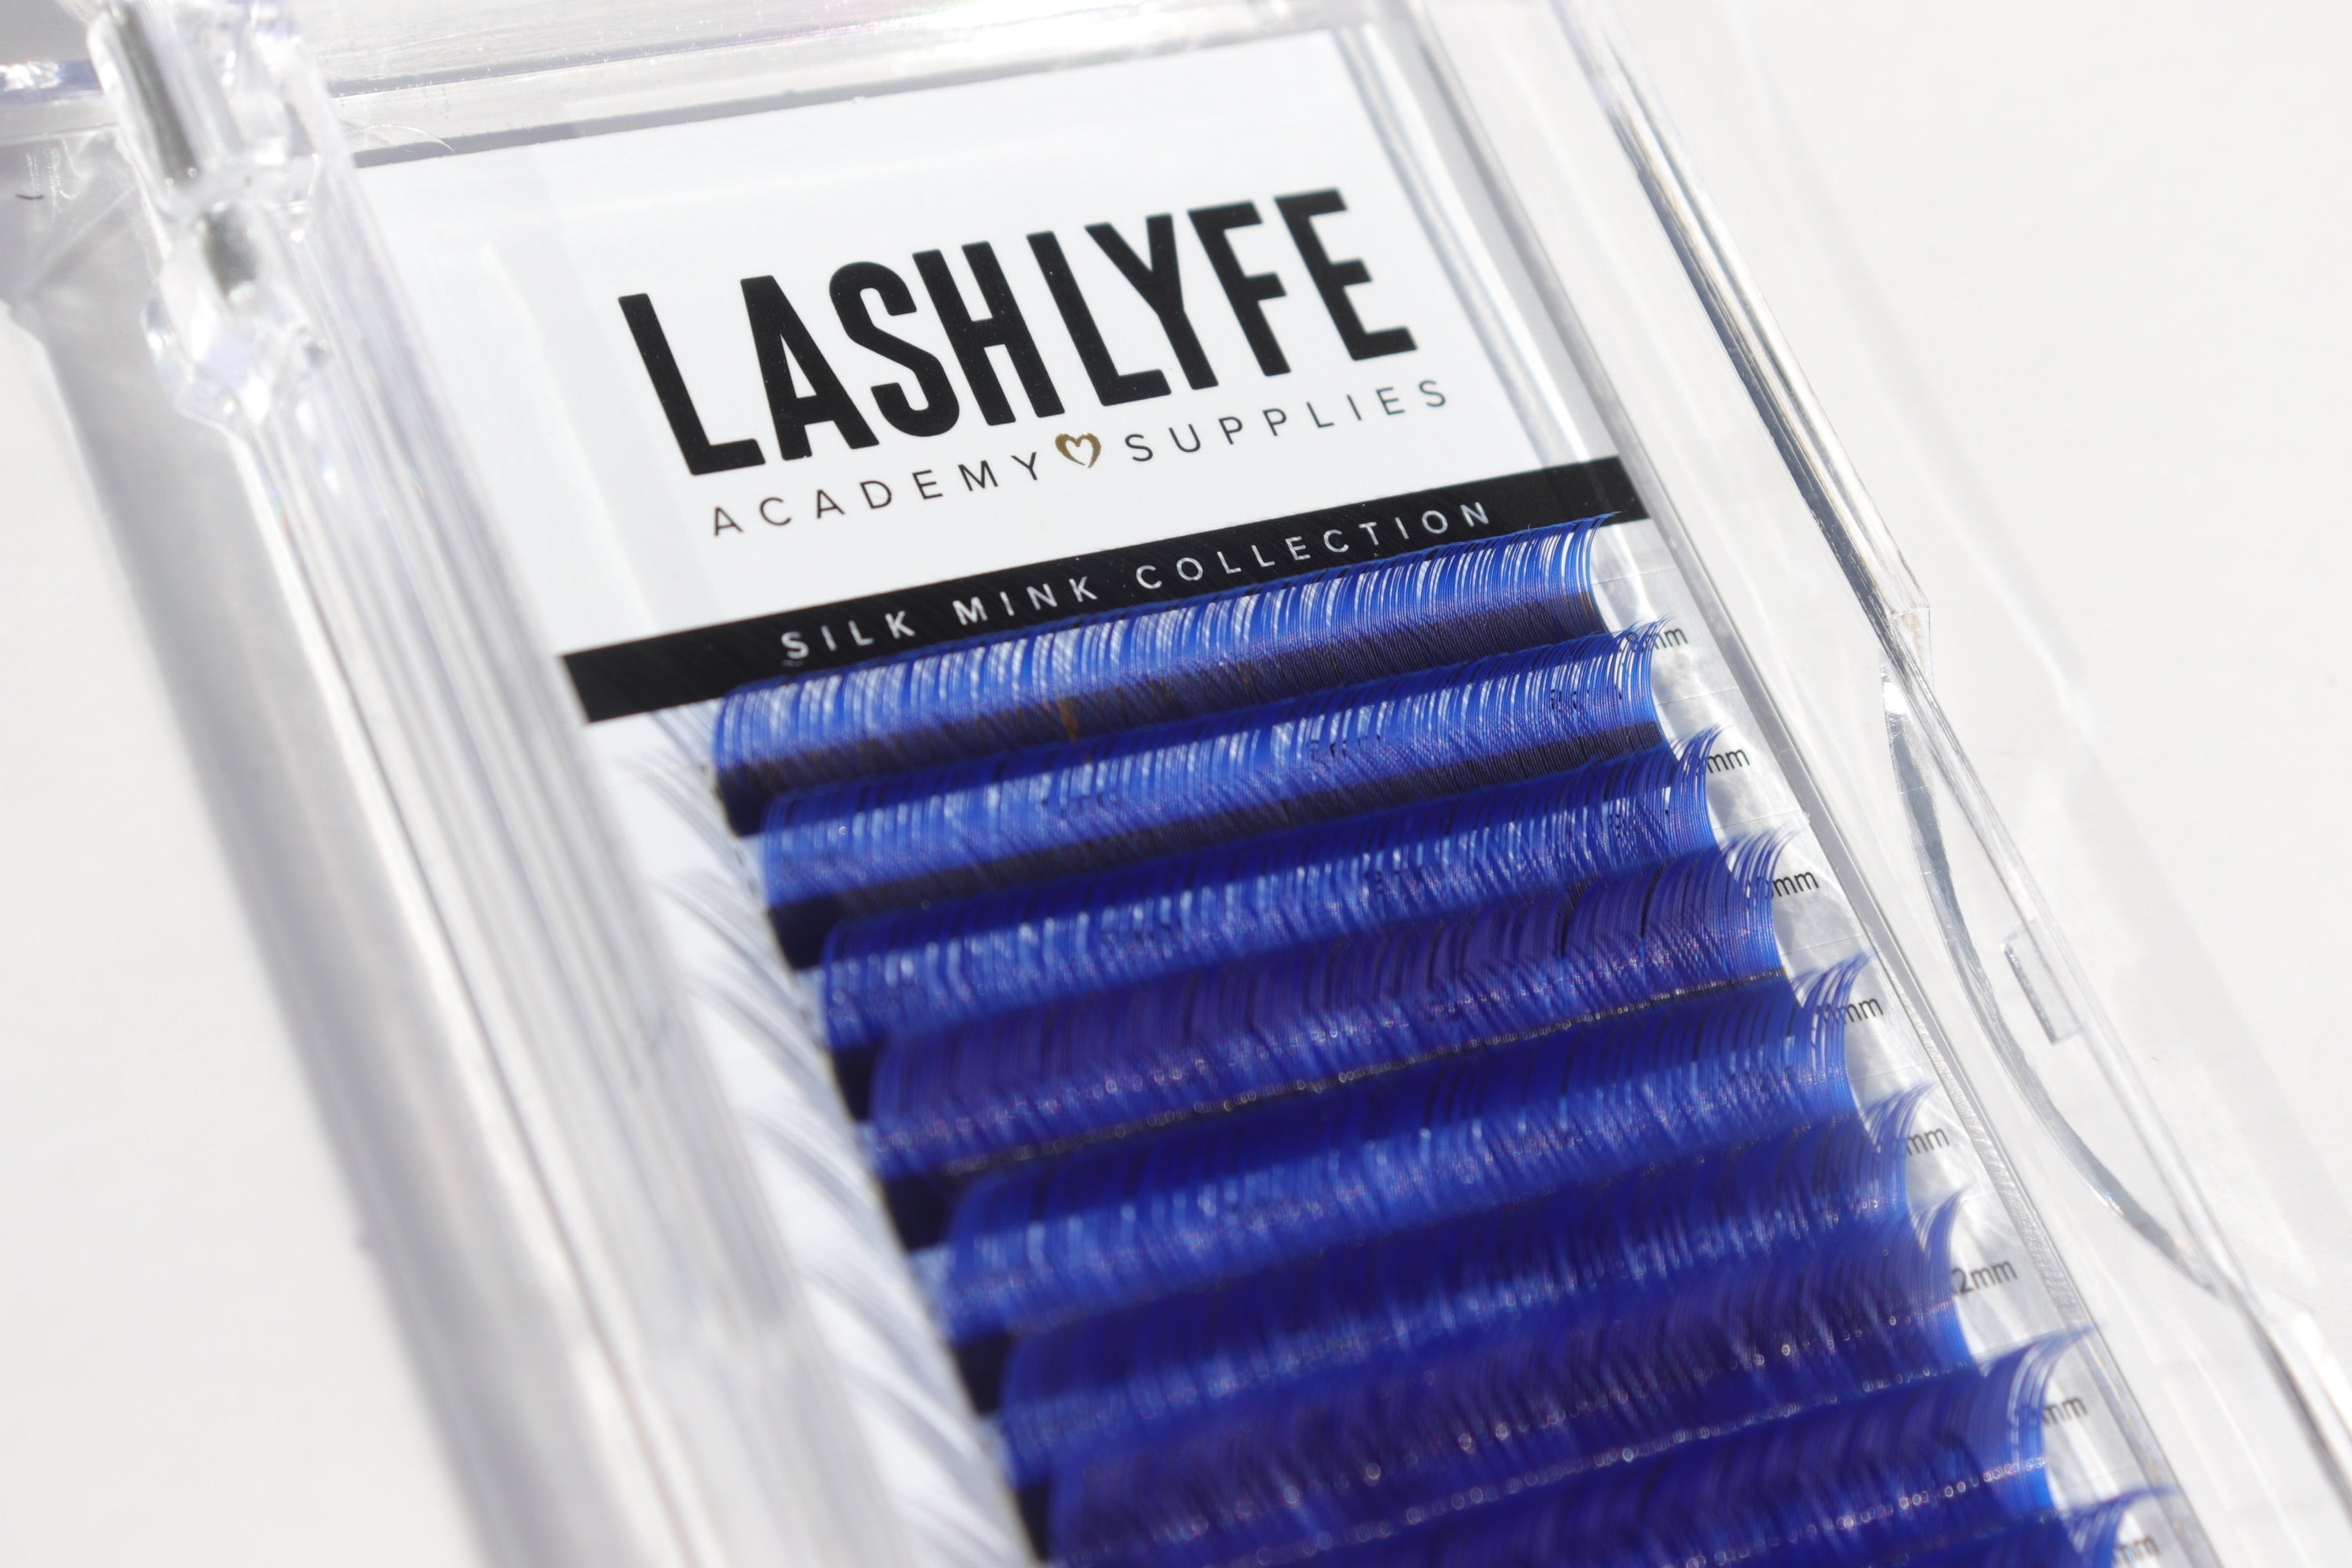 Blue Eyelash Extensions | Eyelash Extensions | LashLYFE Academy